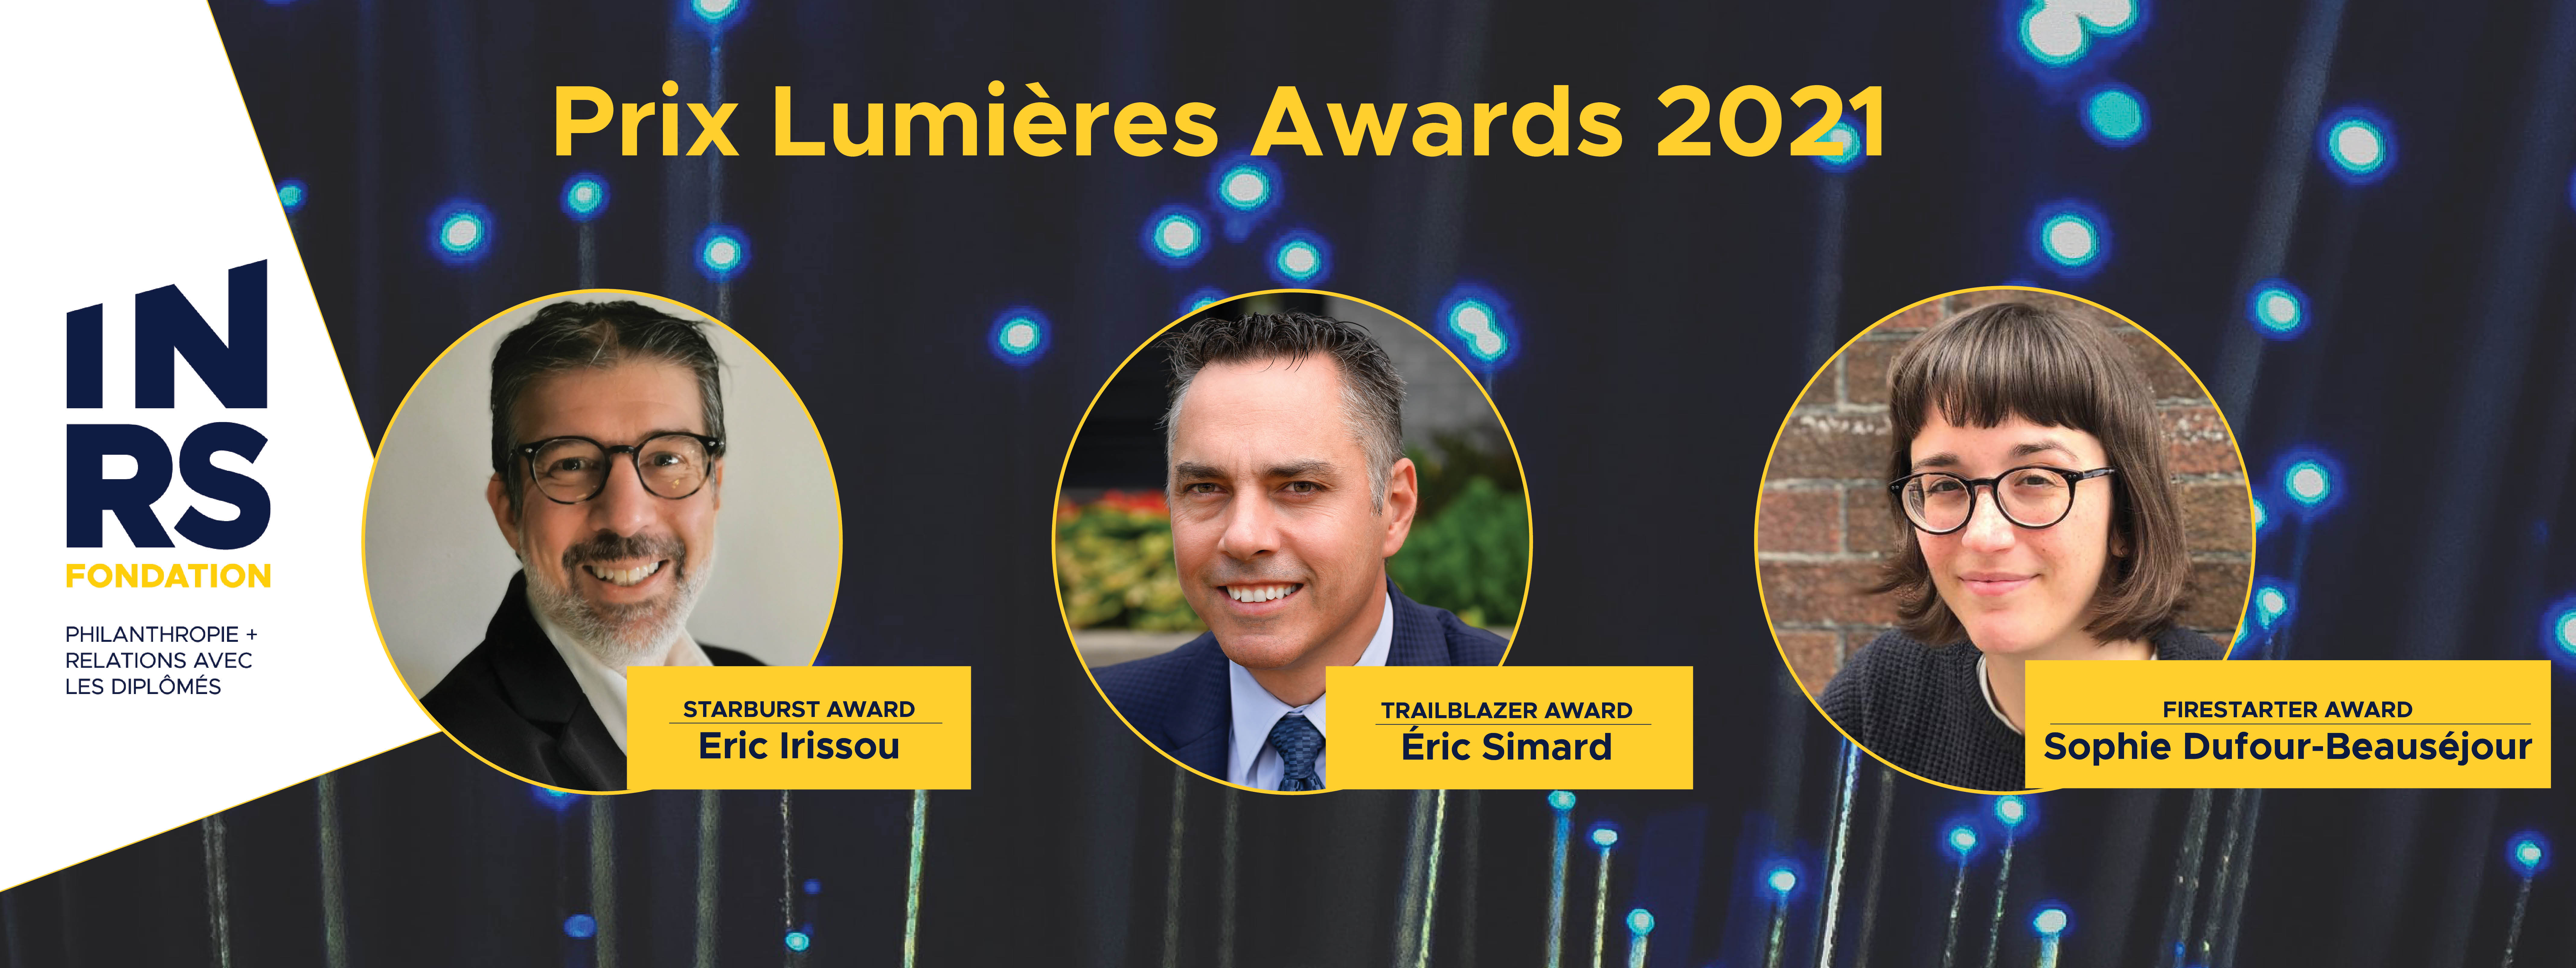 Banner: 2021 Prix Lumières Awardees